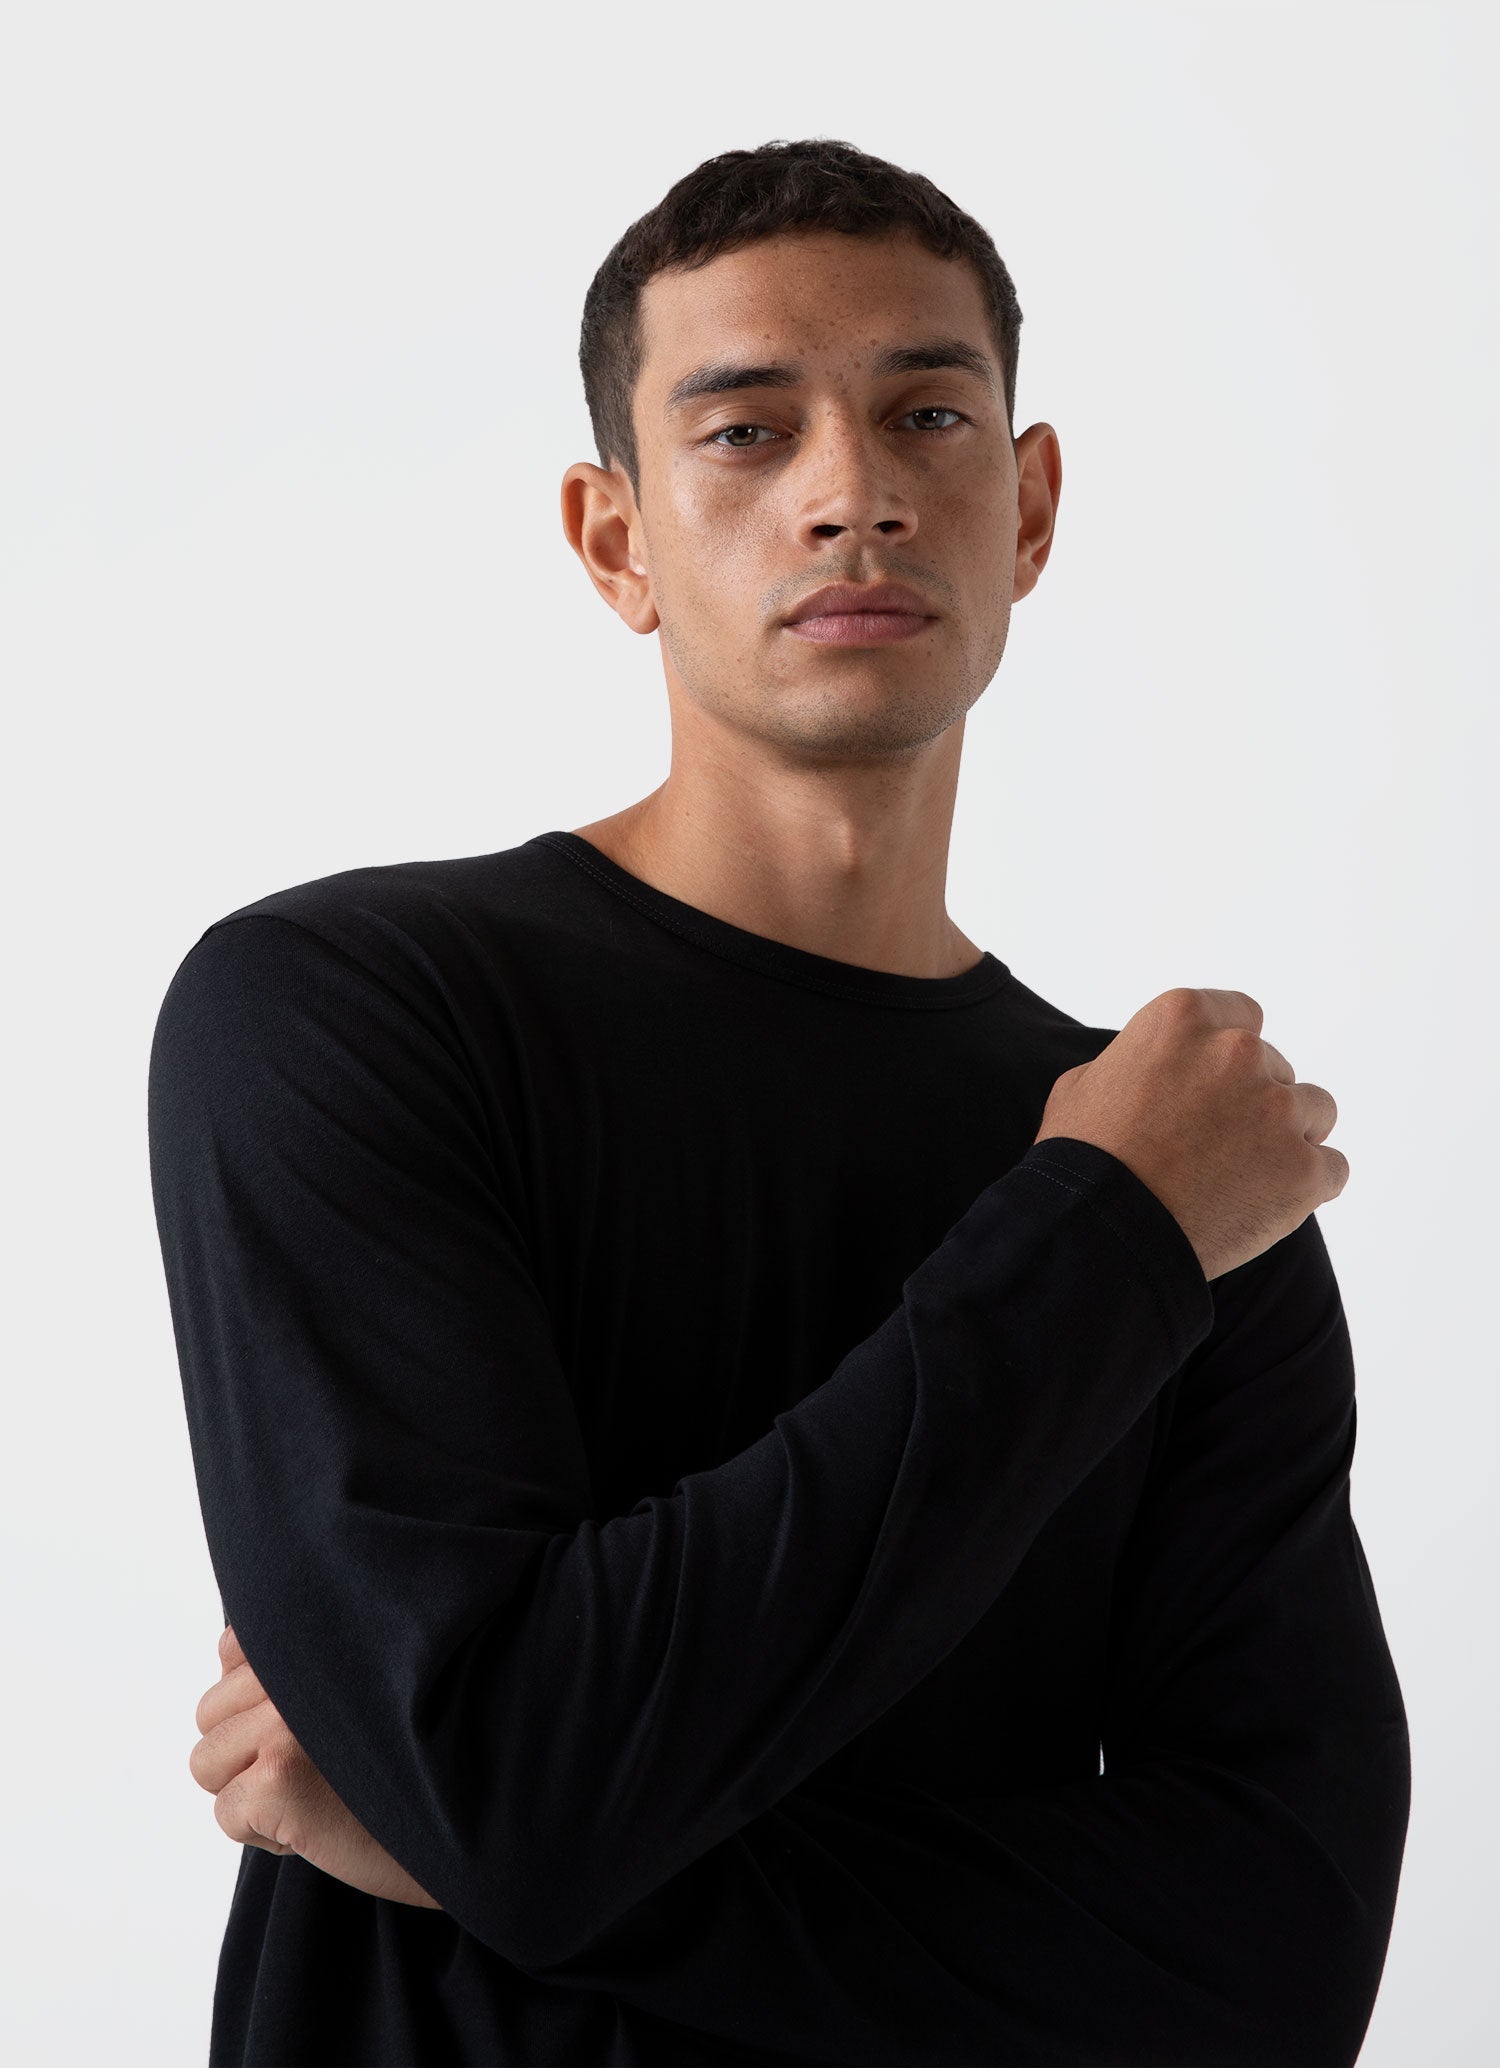 Men's Cotton Modal Lounge Long Sleeve T-shirt in Black